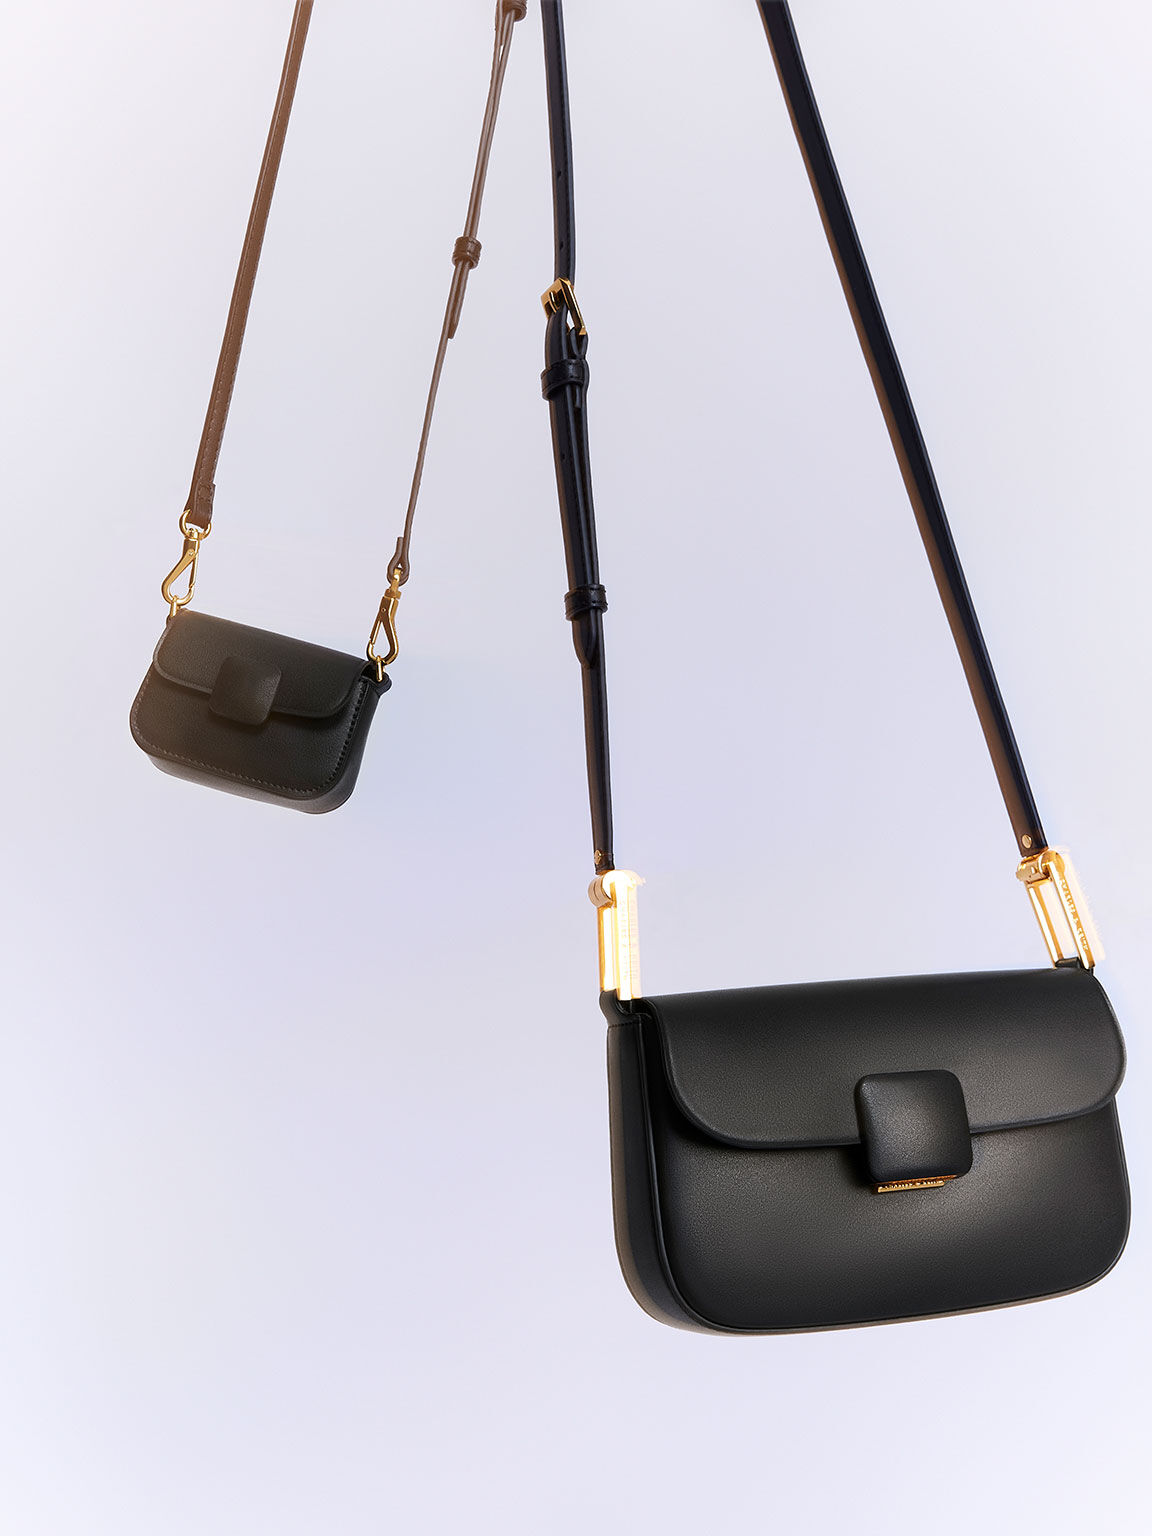 Joelle Hawkens Victory Folder Large Black Leather Satchel Convertible Bag  Purse | eBay